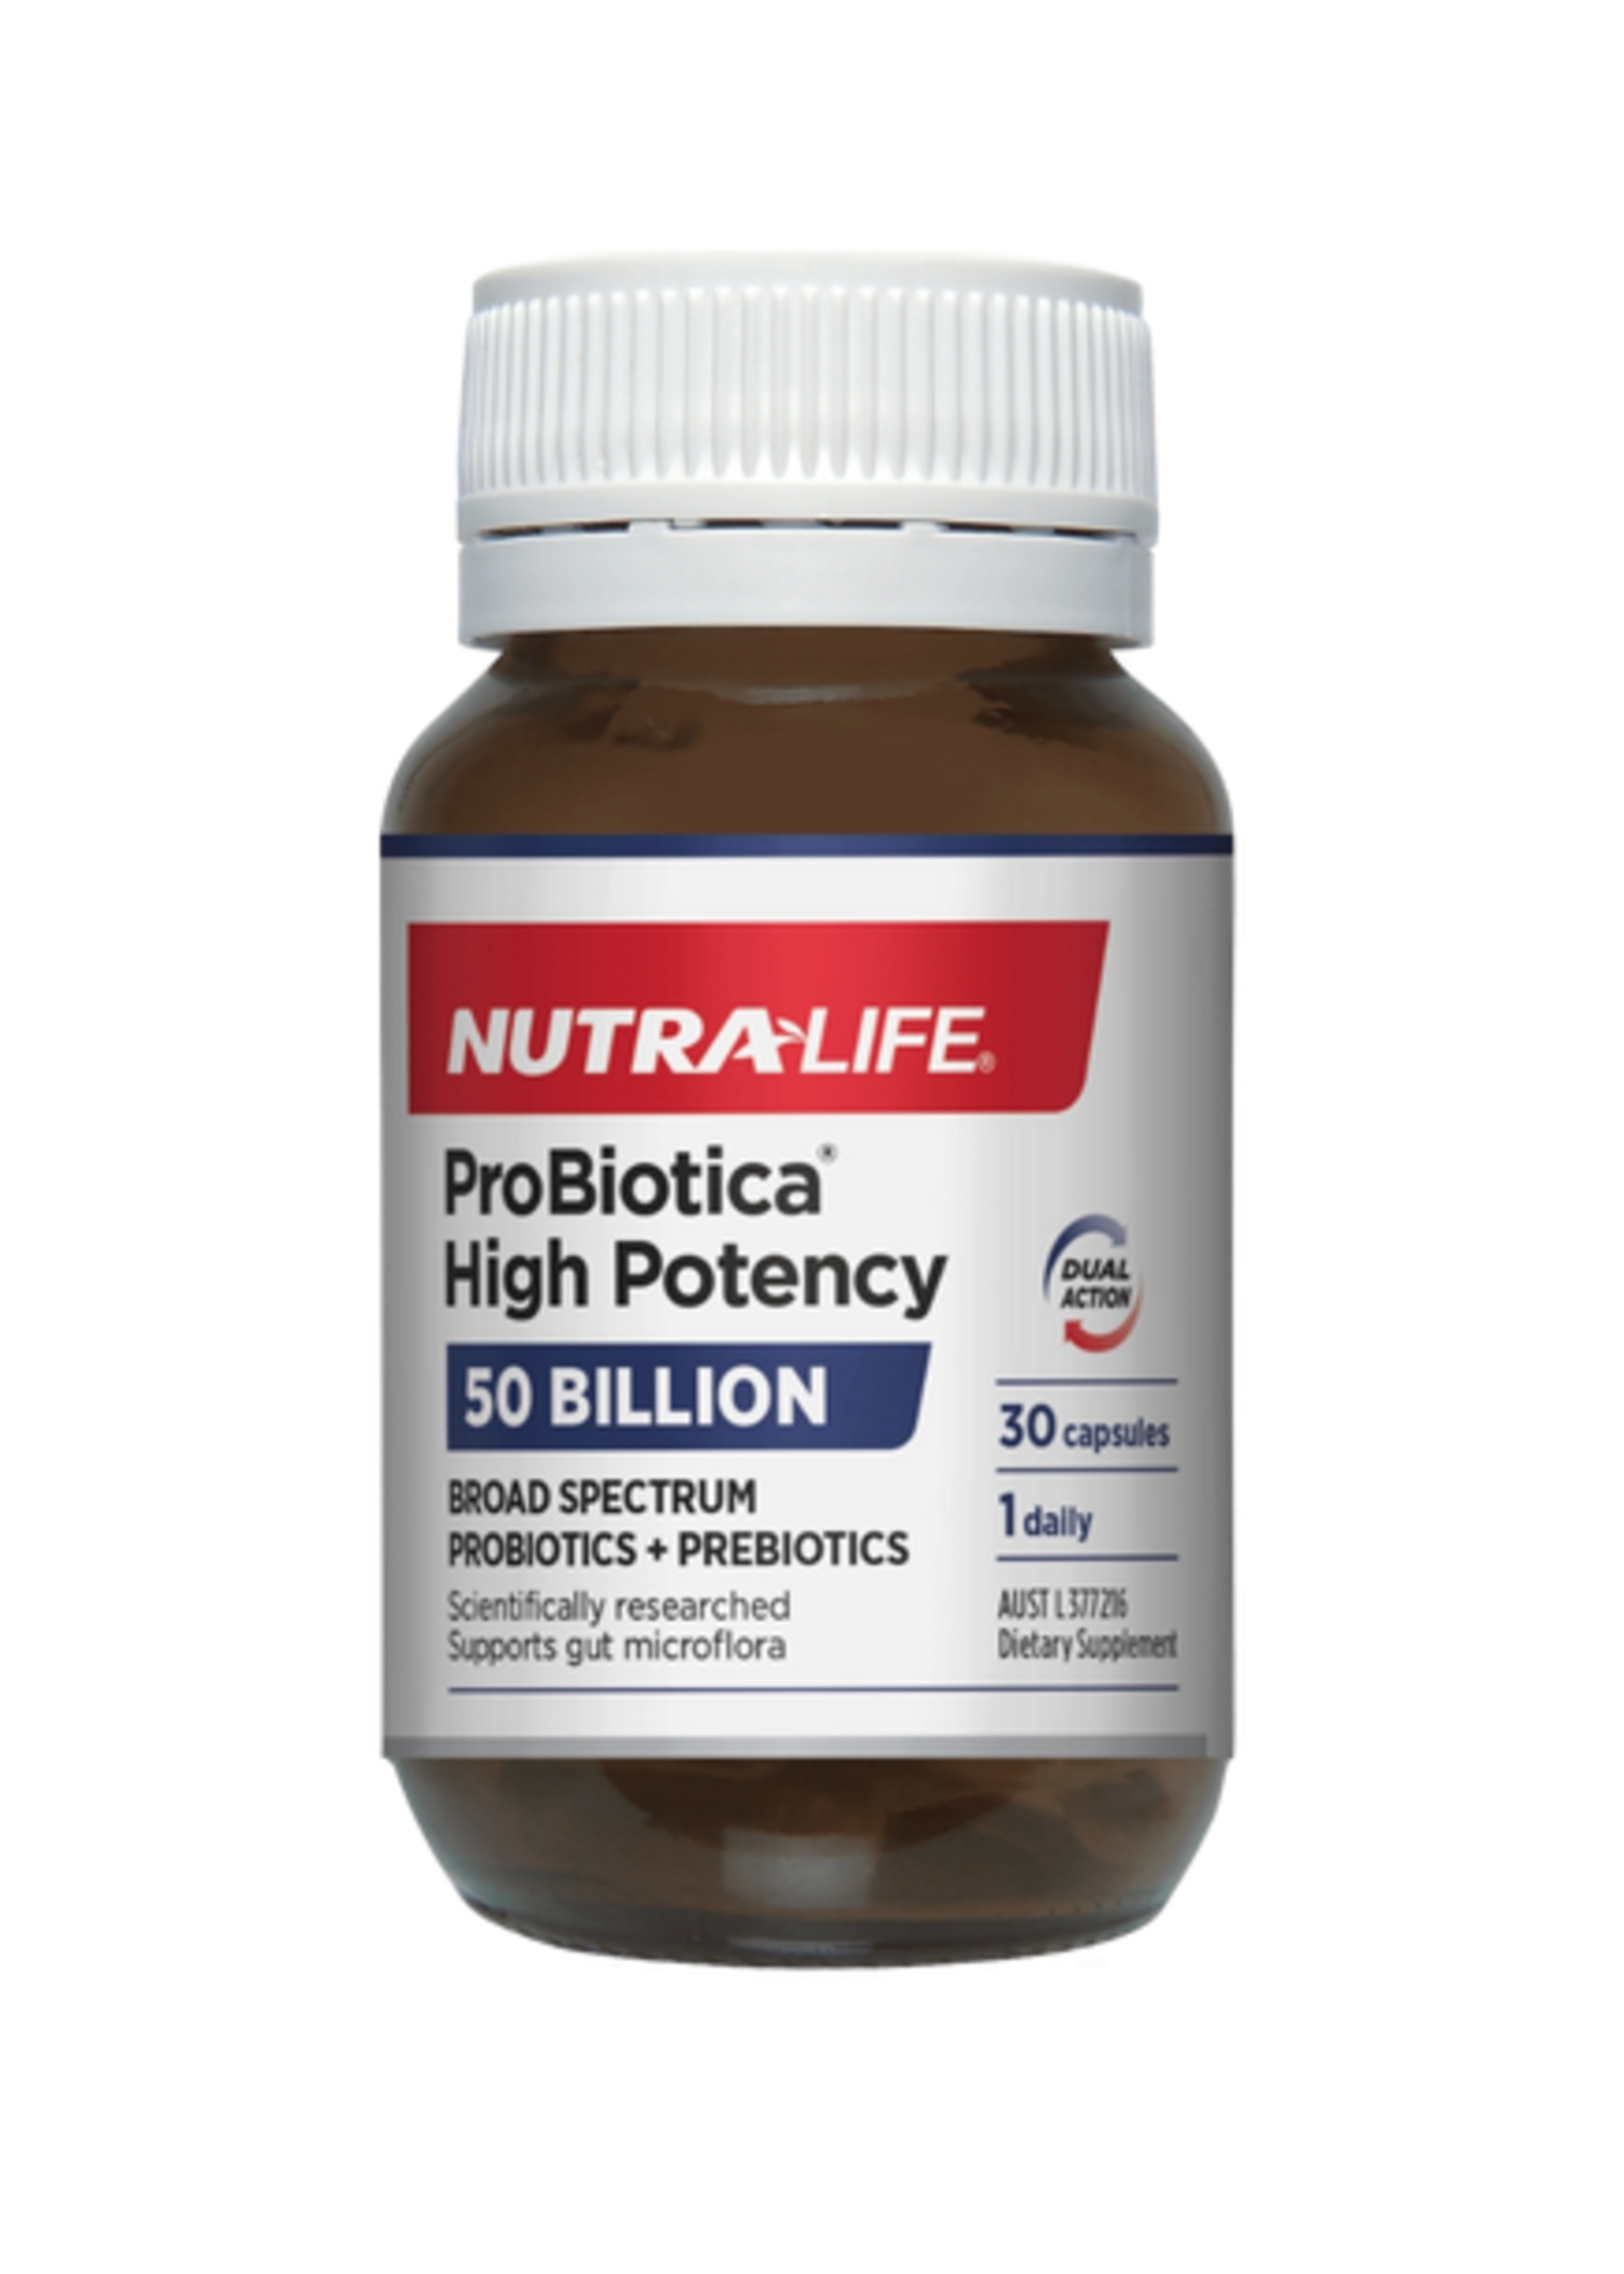 NutraLife Nutralife Probiotica High Potency 50c